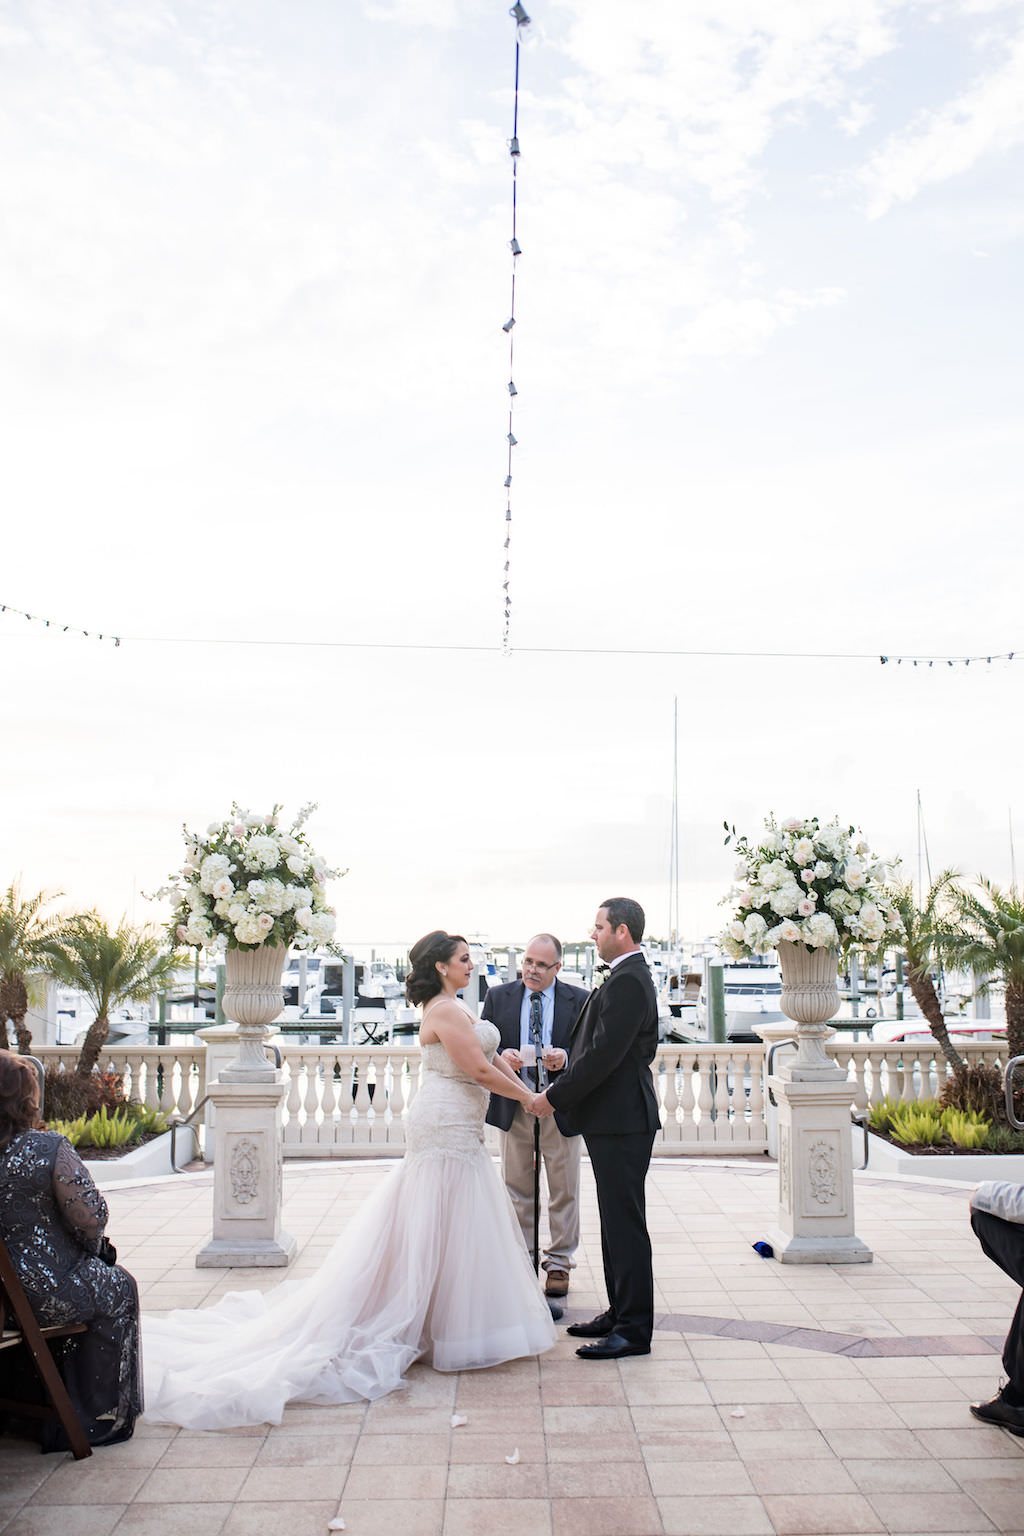 Florida Bride and Groom Exchanging Vows During Wedding Ceremony Portrait | Waterfront Tampa Bay Wedding Venue Westshore Yacht Club